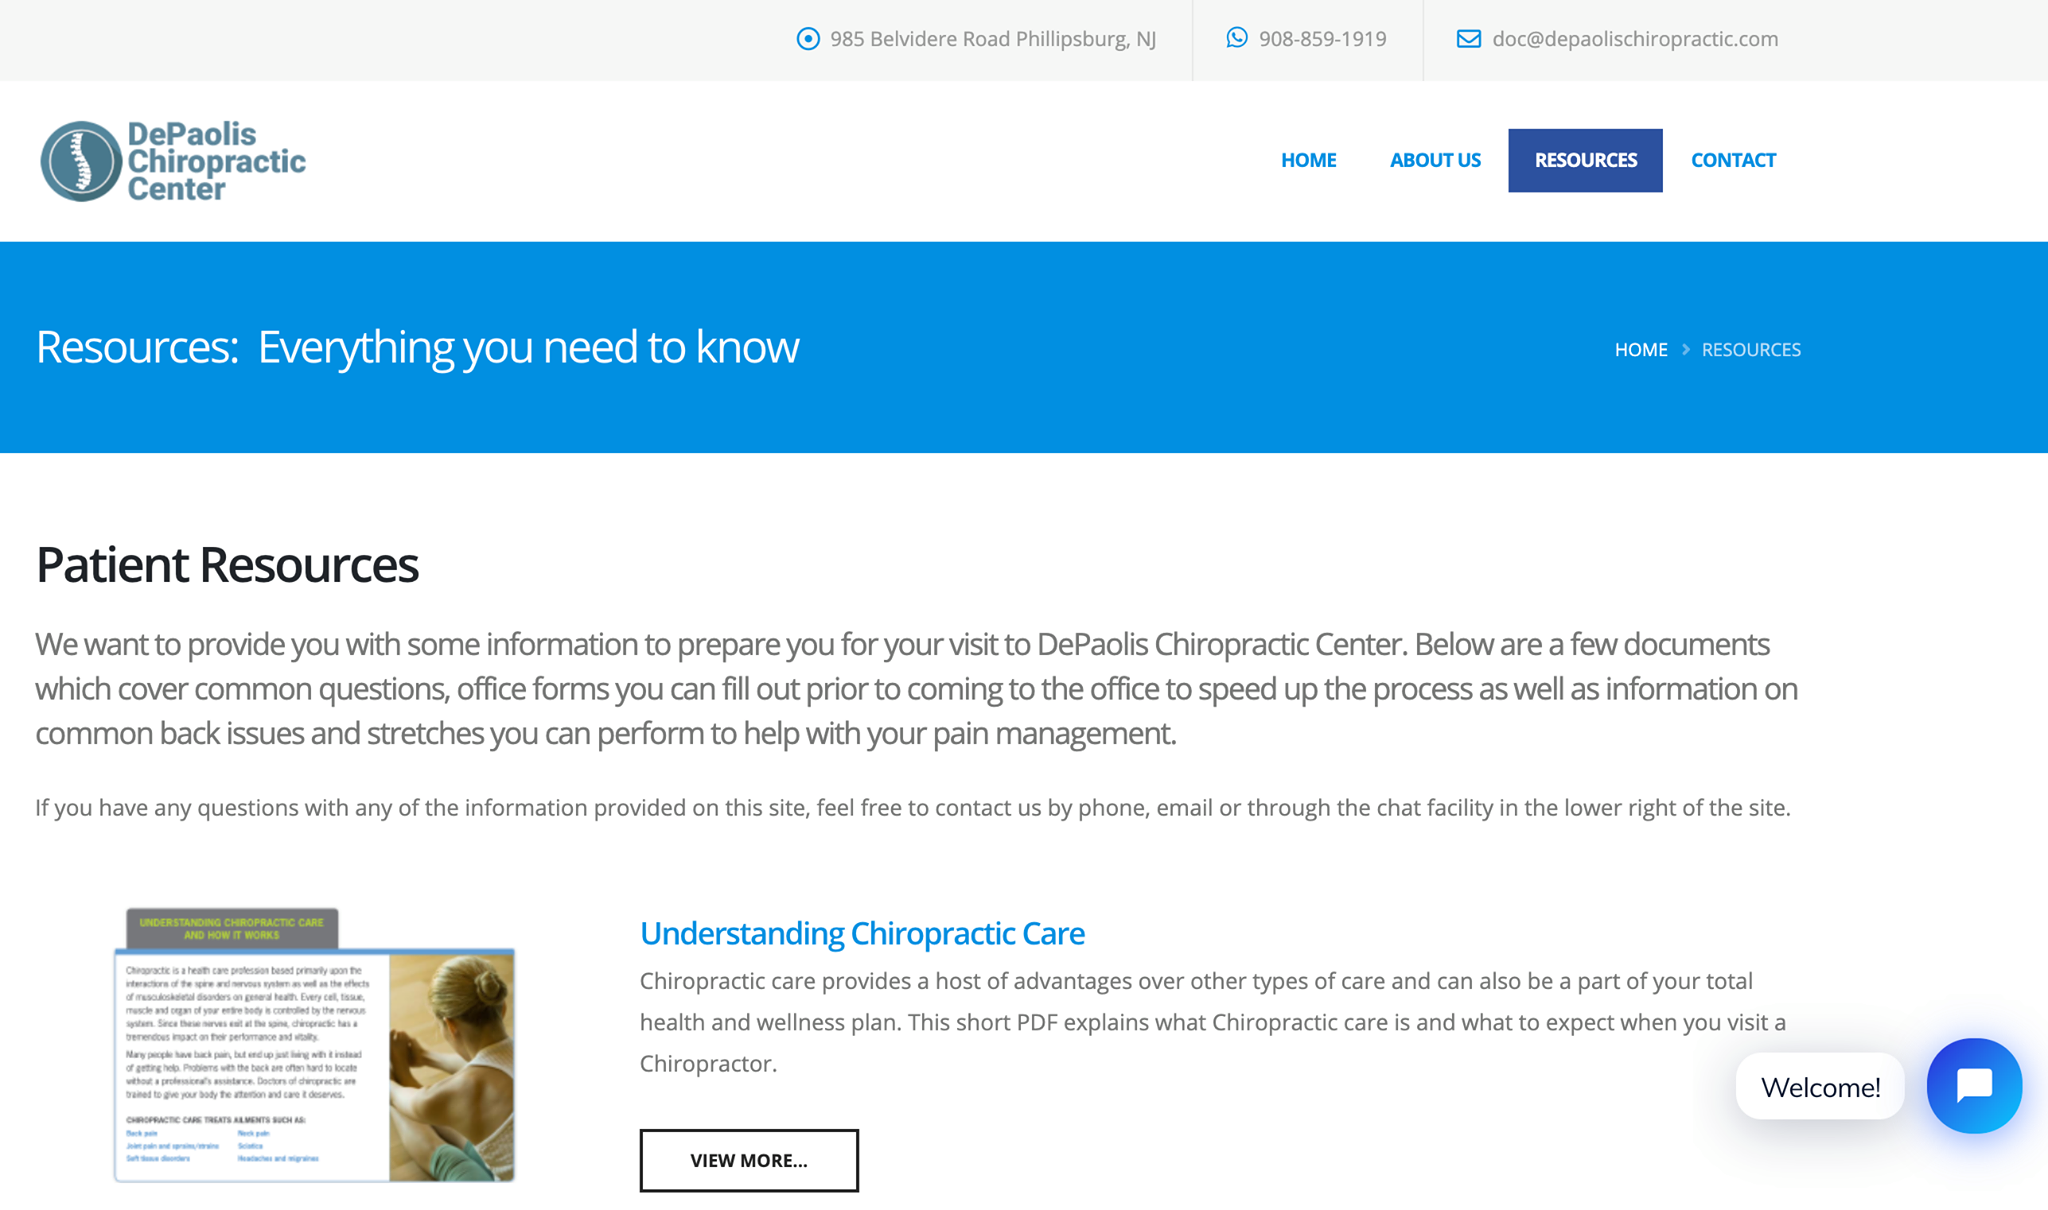 DePaolis Chiropractic Center